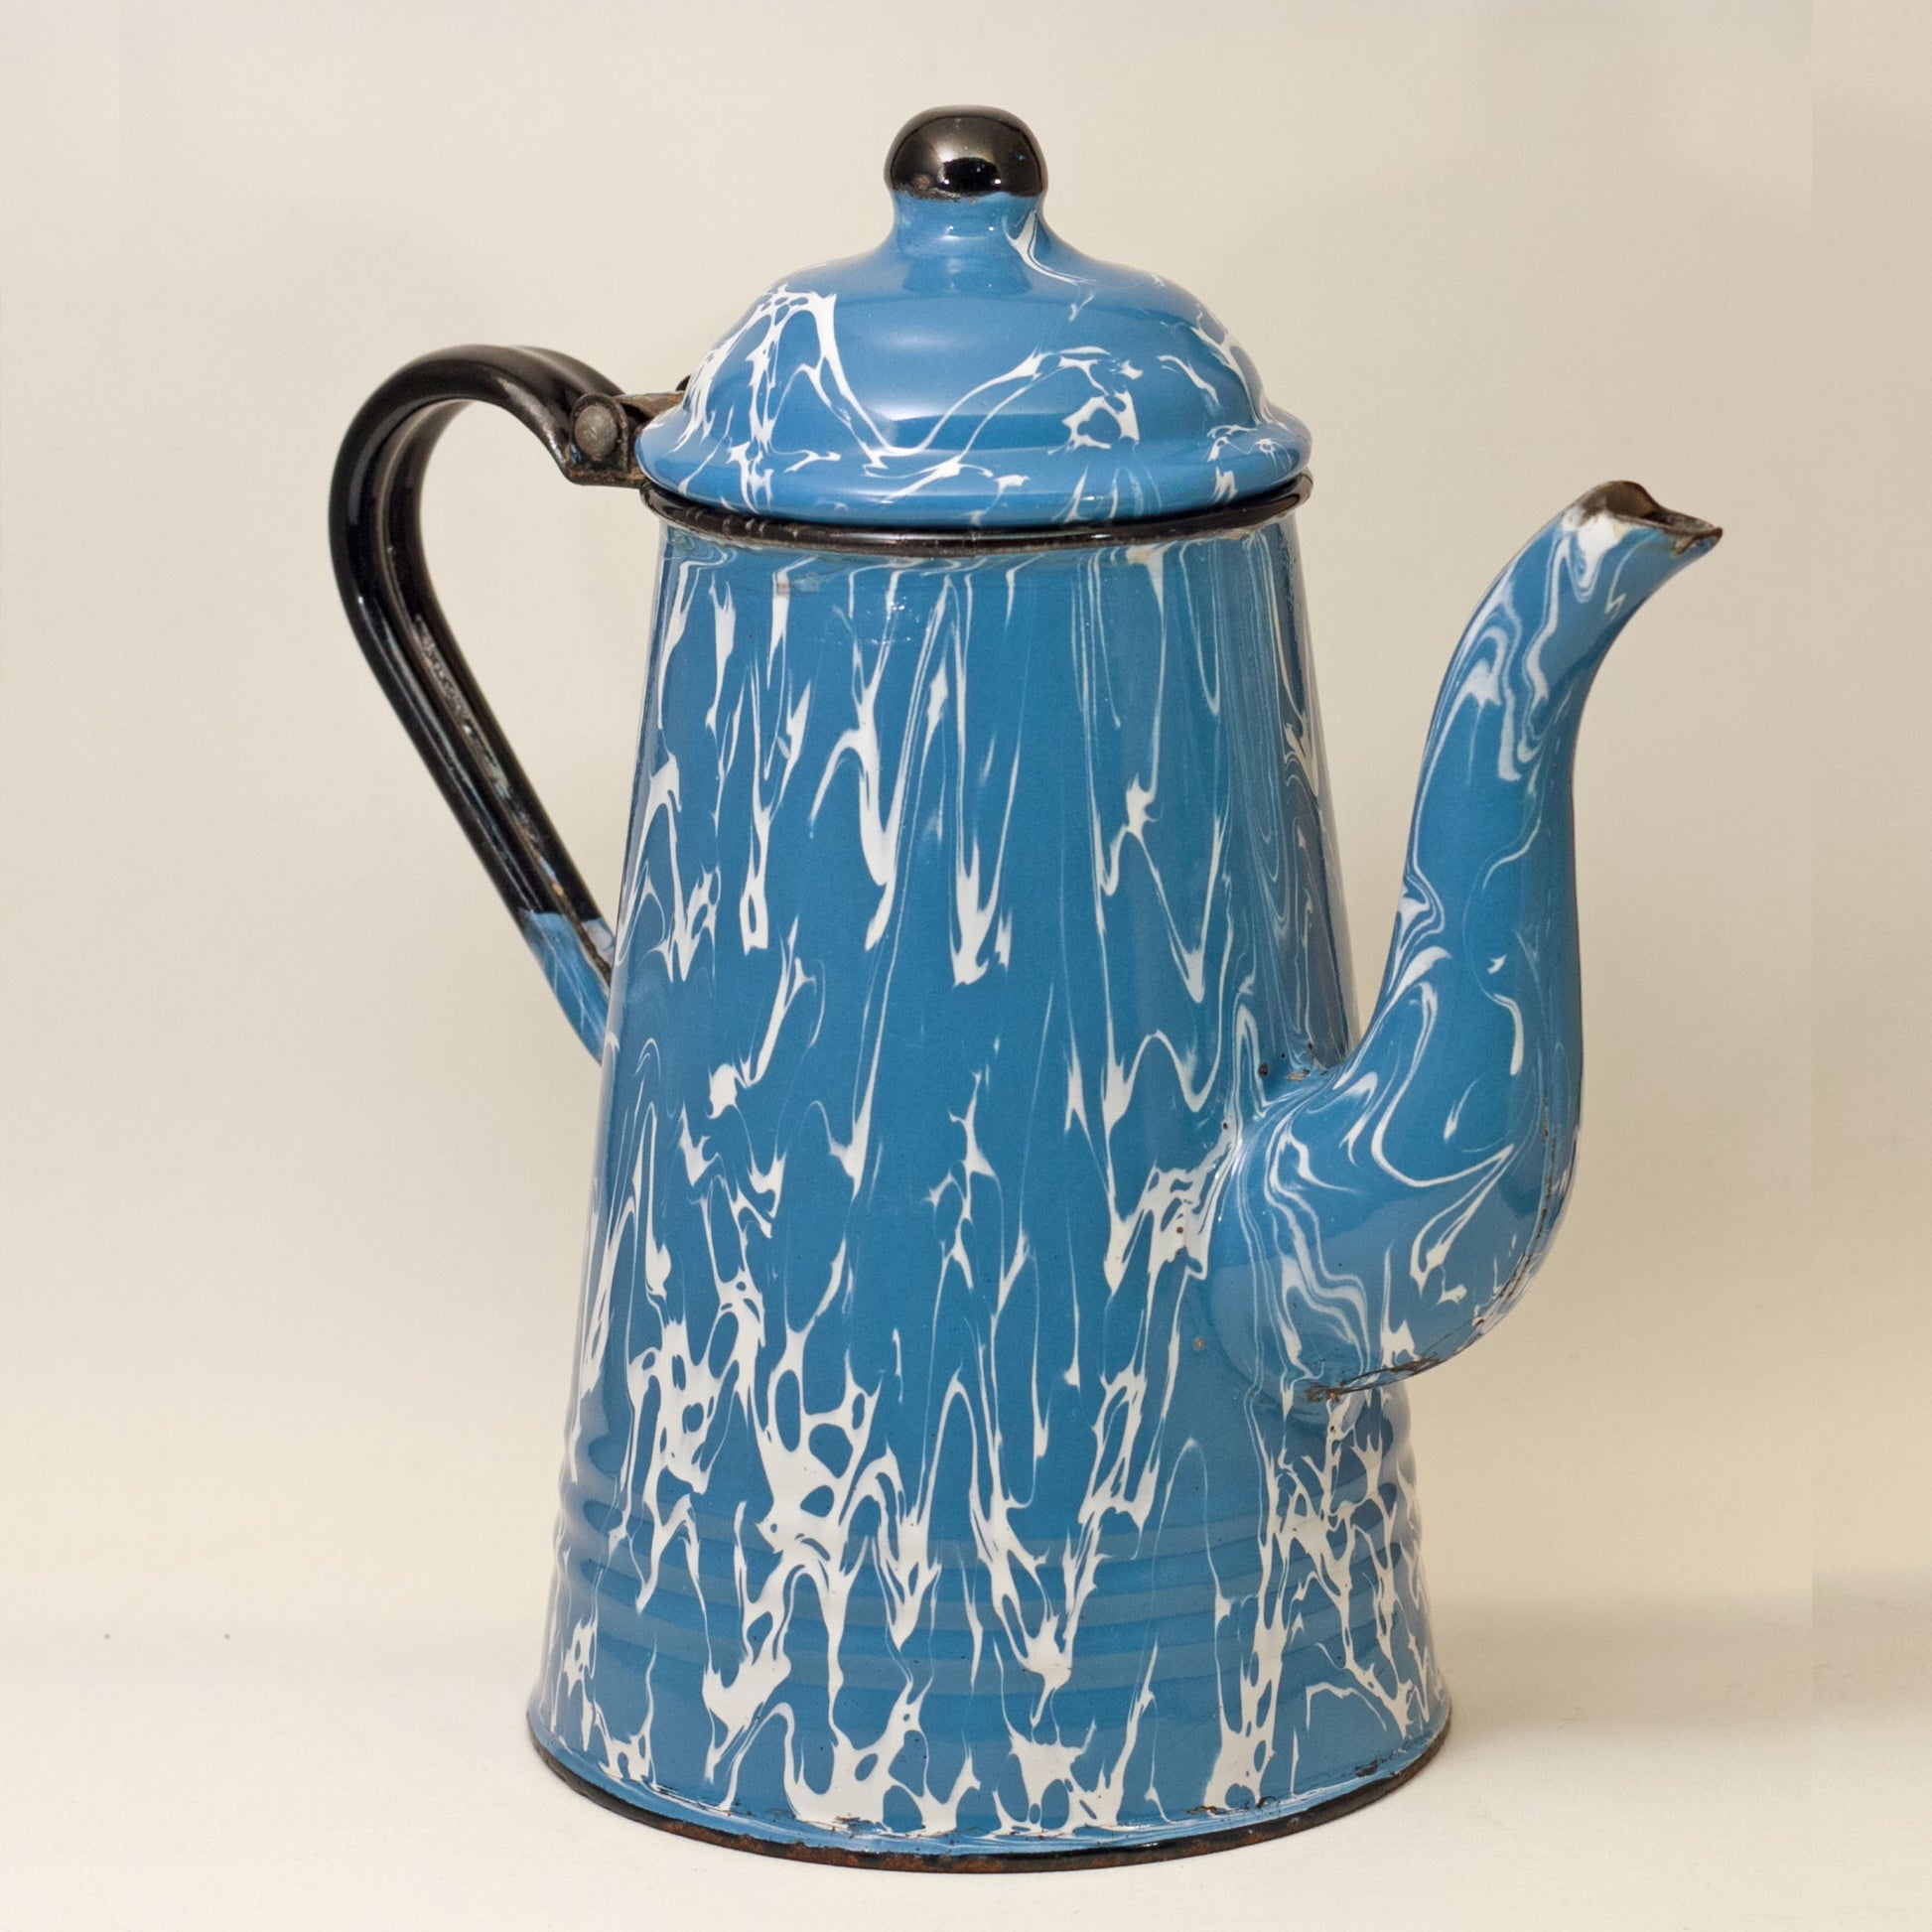 GRANITE WARE GOOSENECK TEAPOT Blue and White Swirl Circa 1880 - 1920